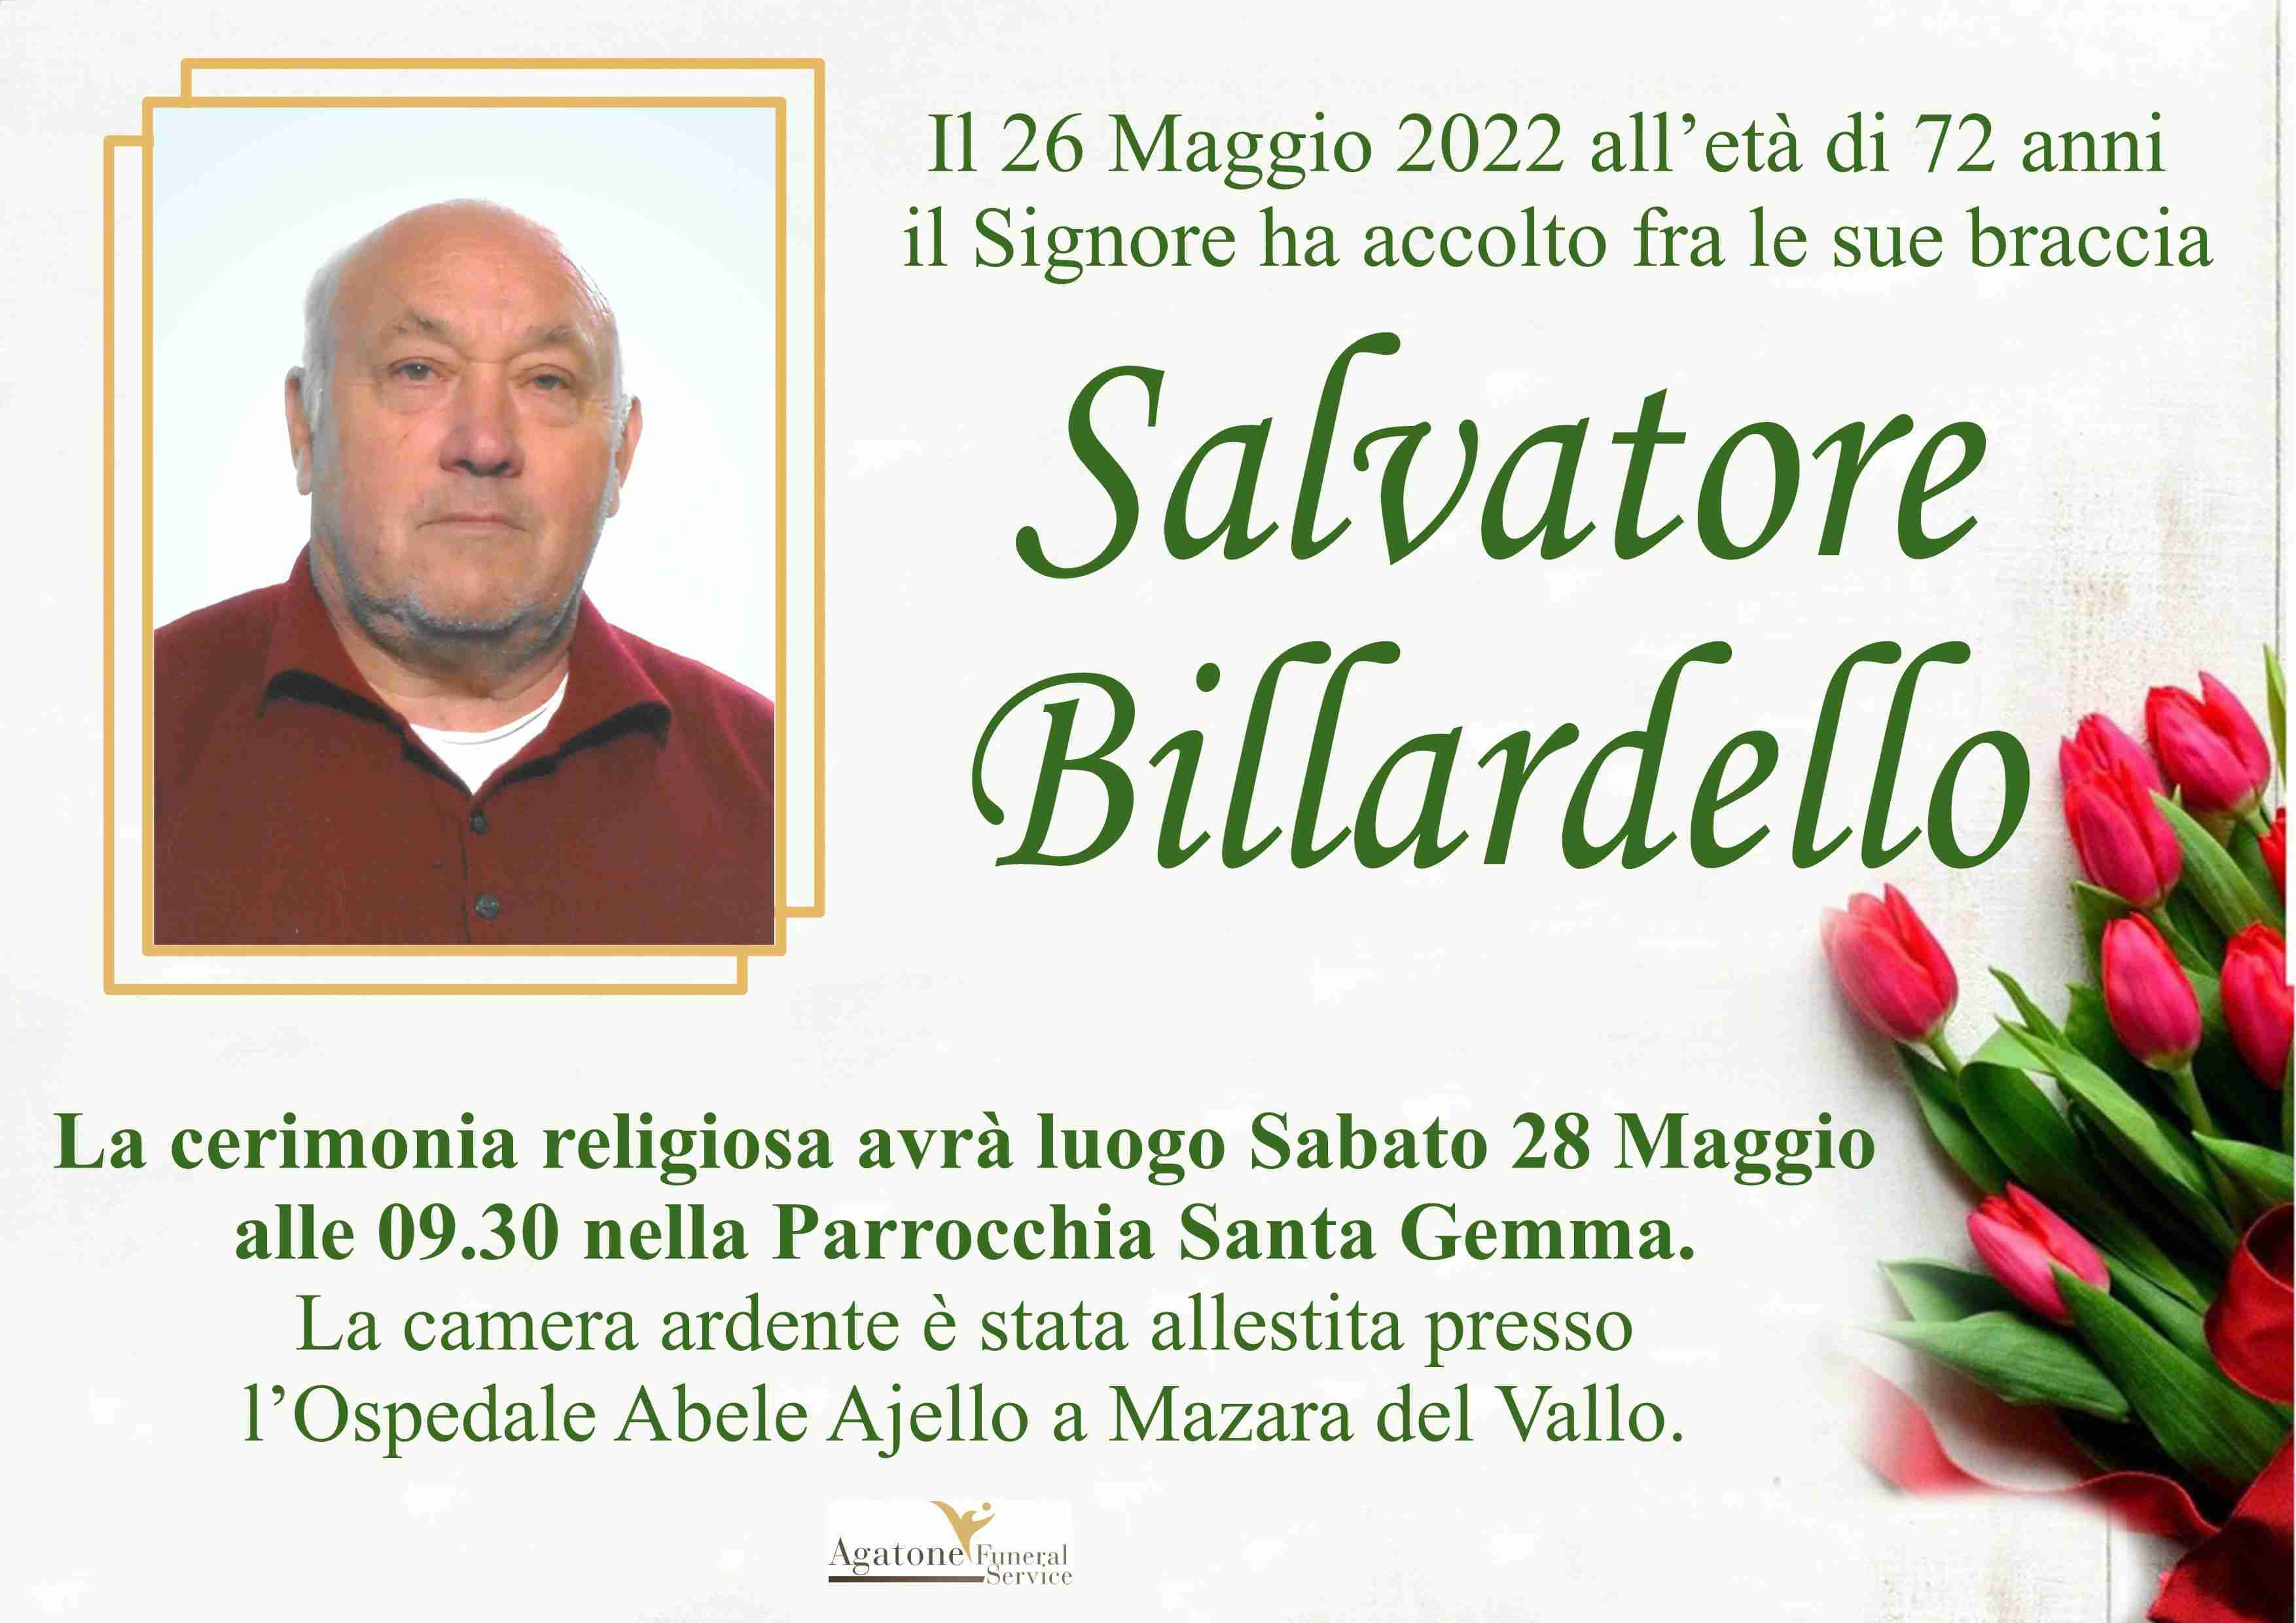 Salvatore Billardello